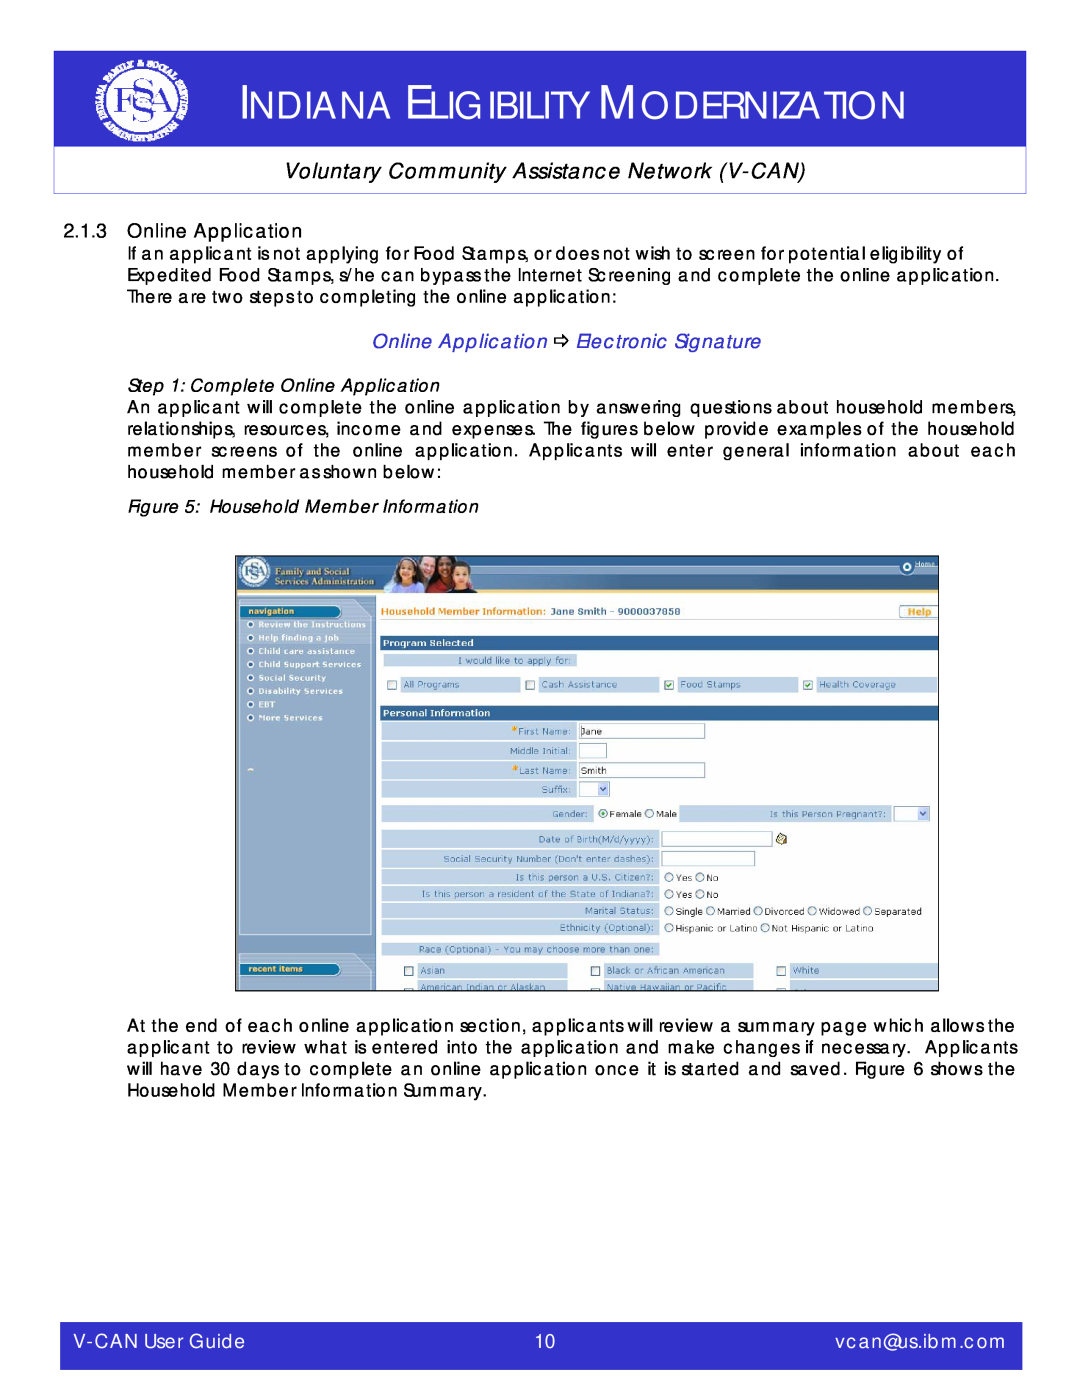 IBM Online Application Ö Electronic Signature, Indiana Eligibility Modernization, V-CAN User Guide, vcan@us.ibm.com 